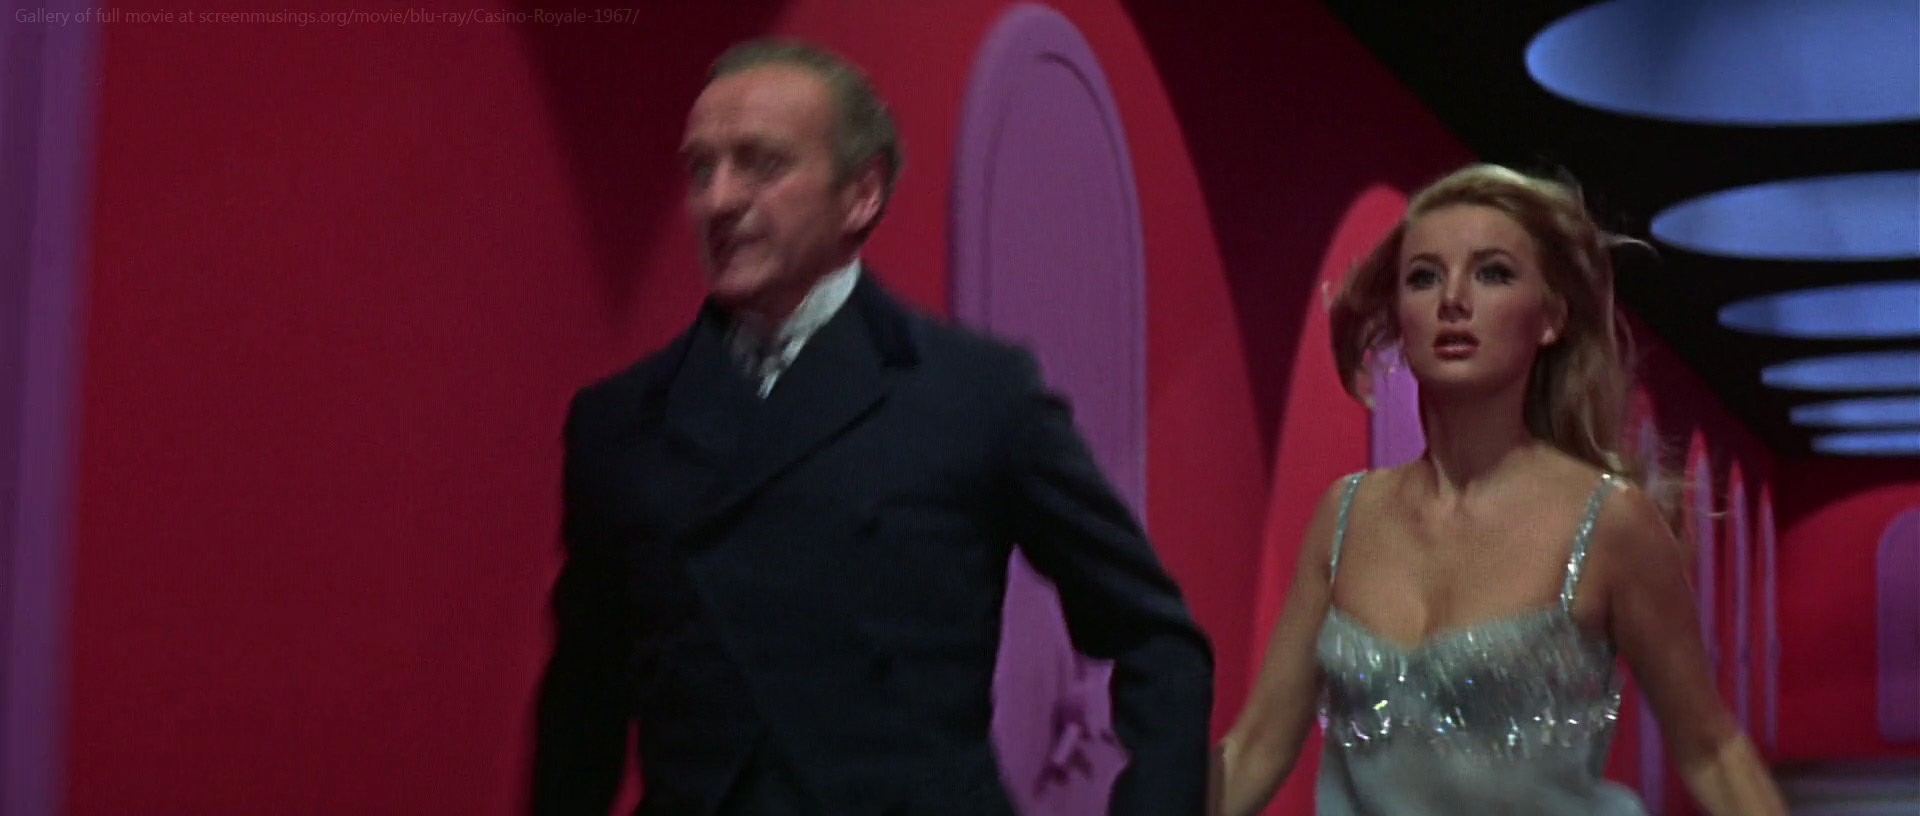 David Niven, Barbara Bouchet, Casino Royale 1967 in Casino Royale